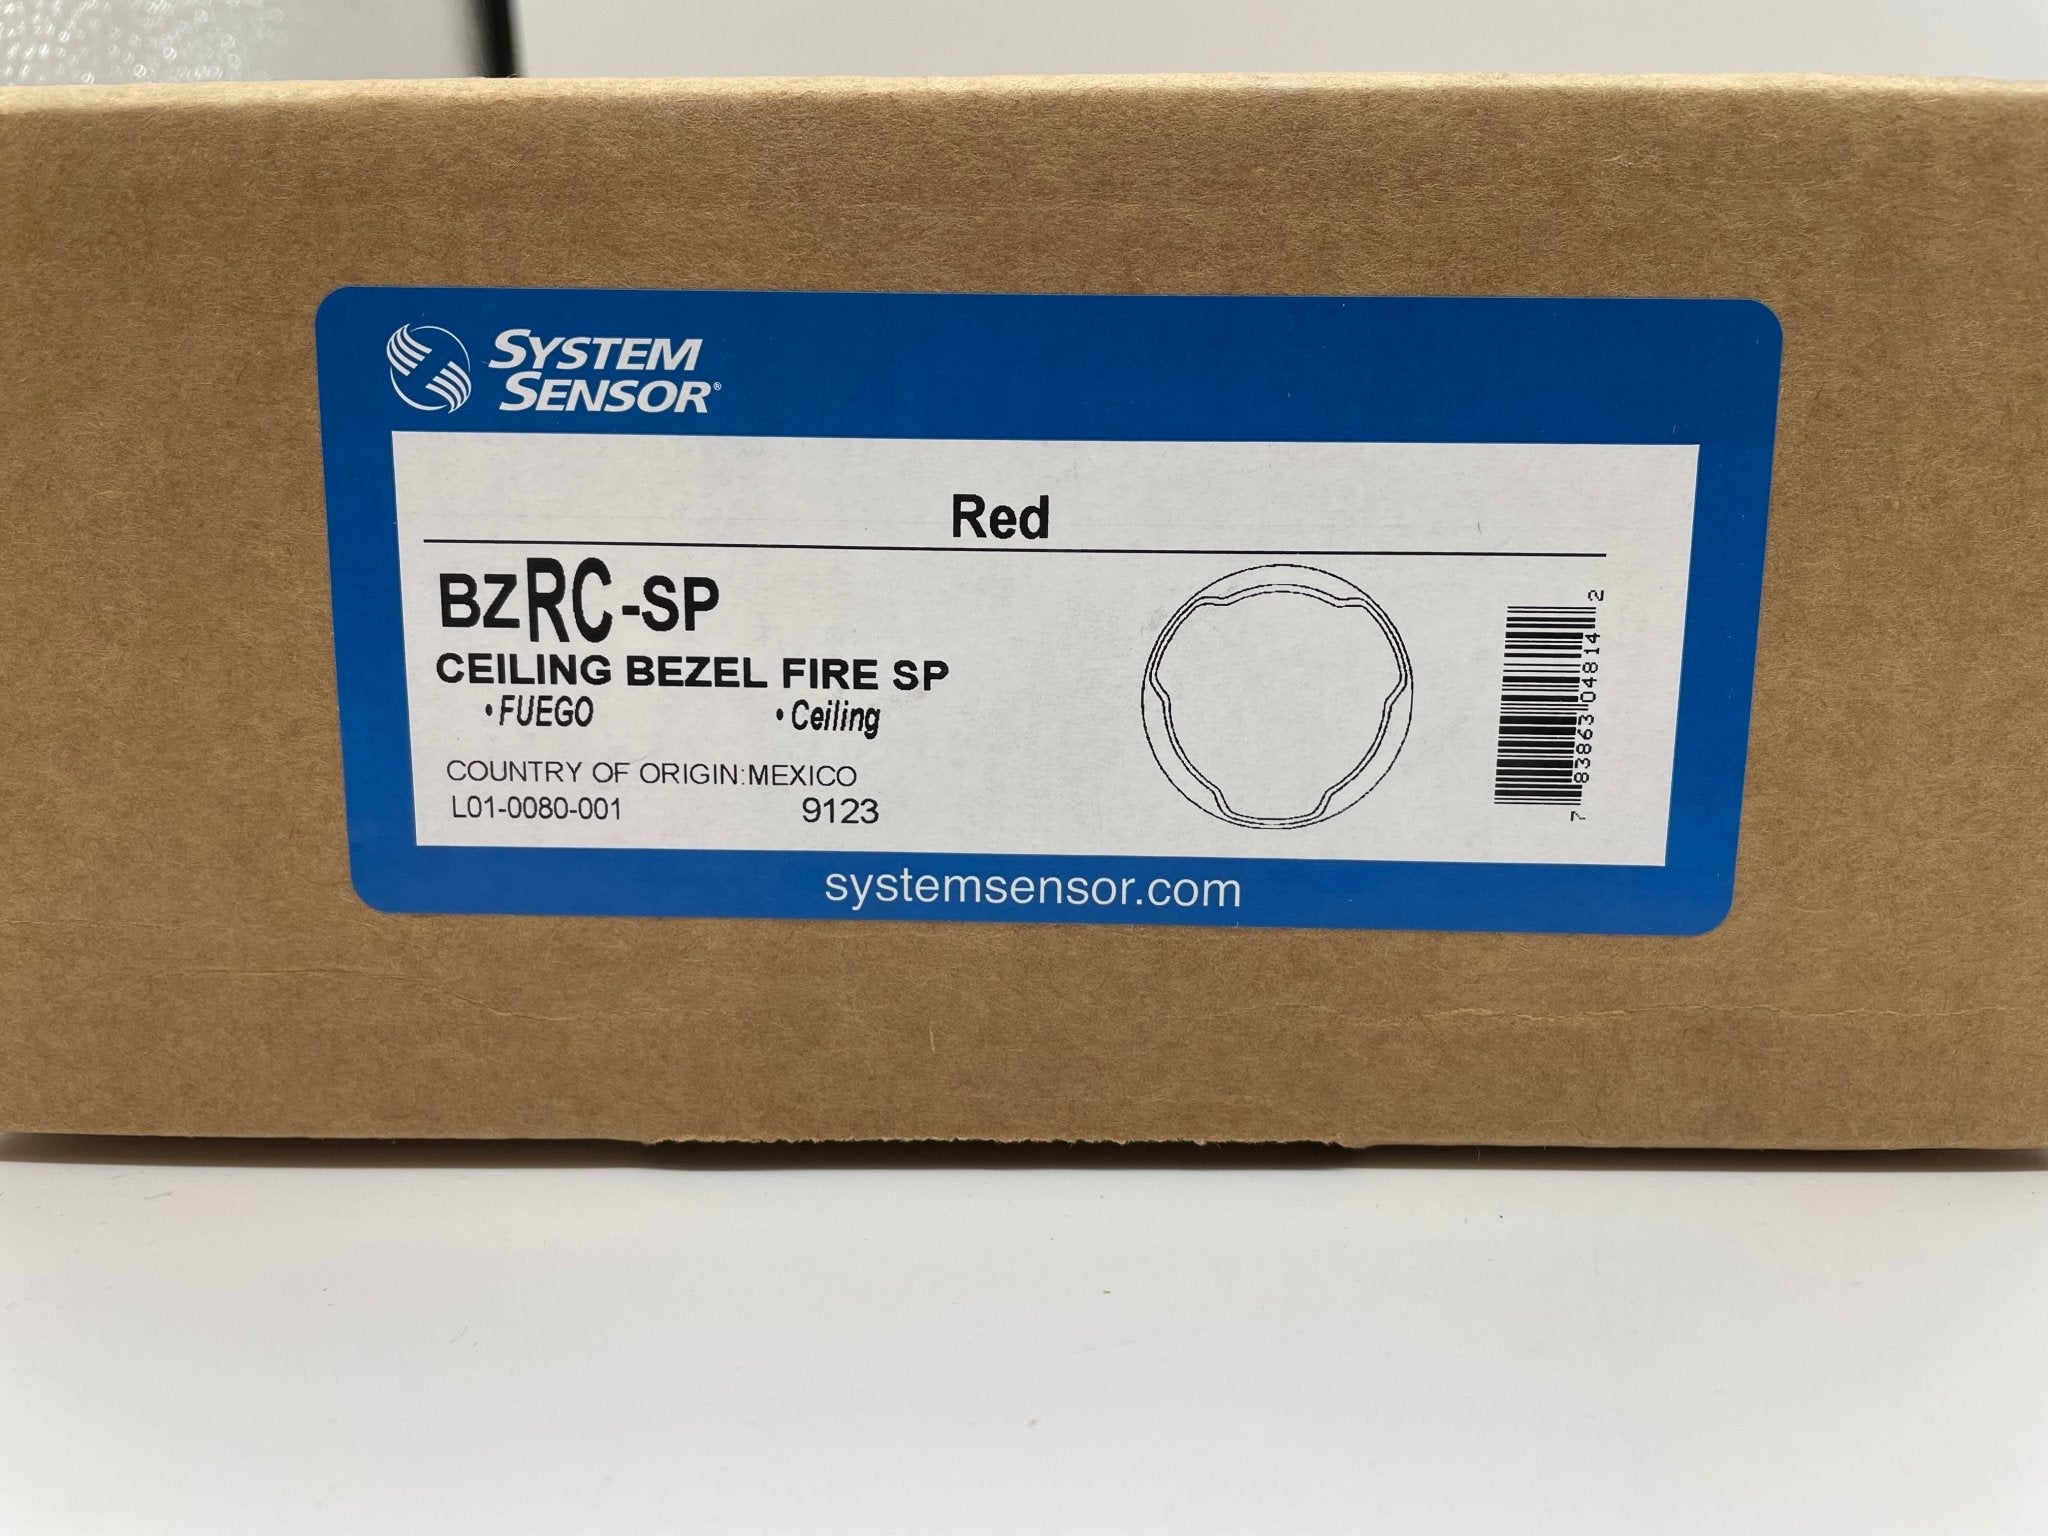 System Sensor BZRC-SP - The Fire Alarm Supplier